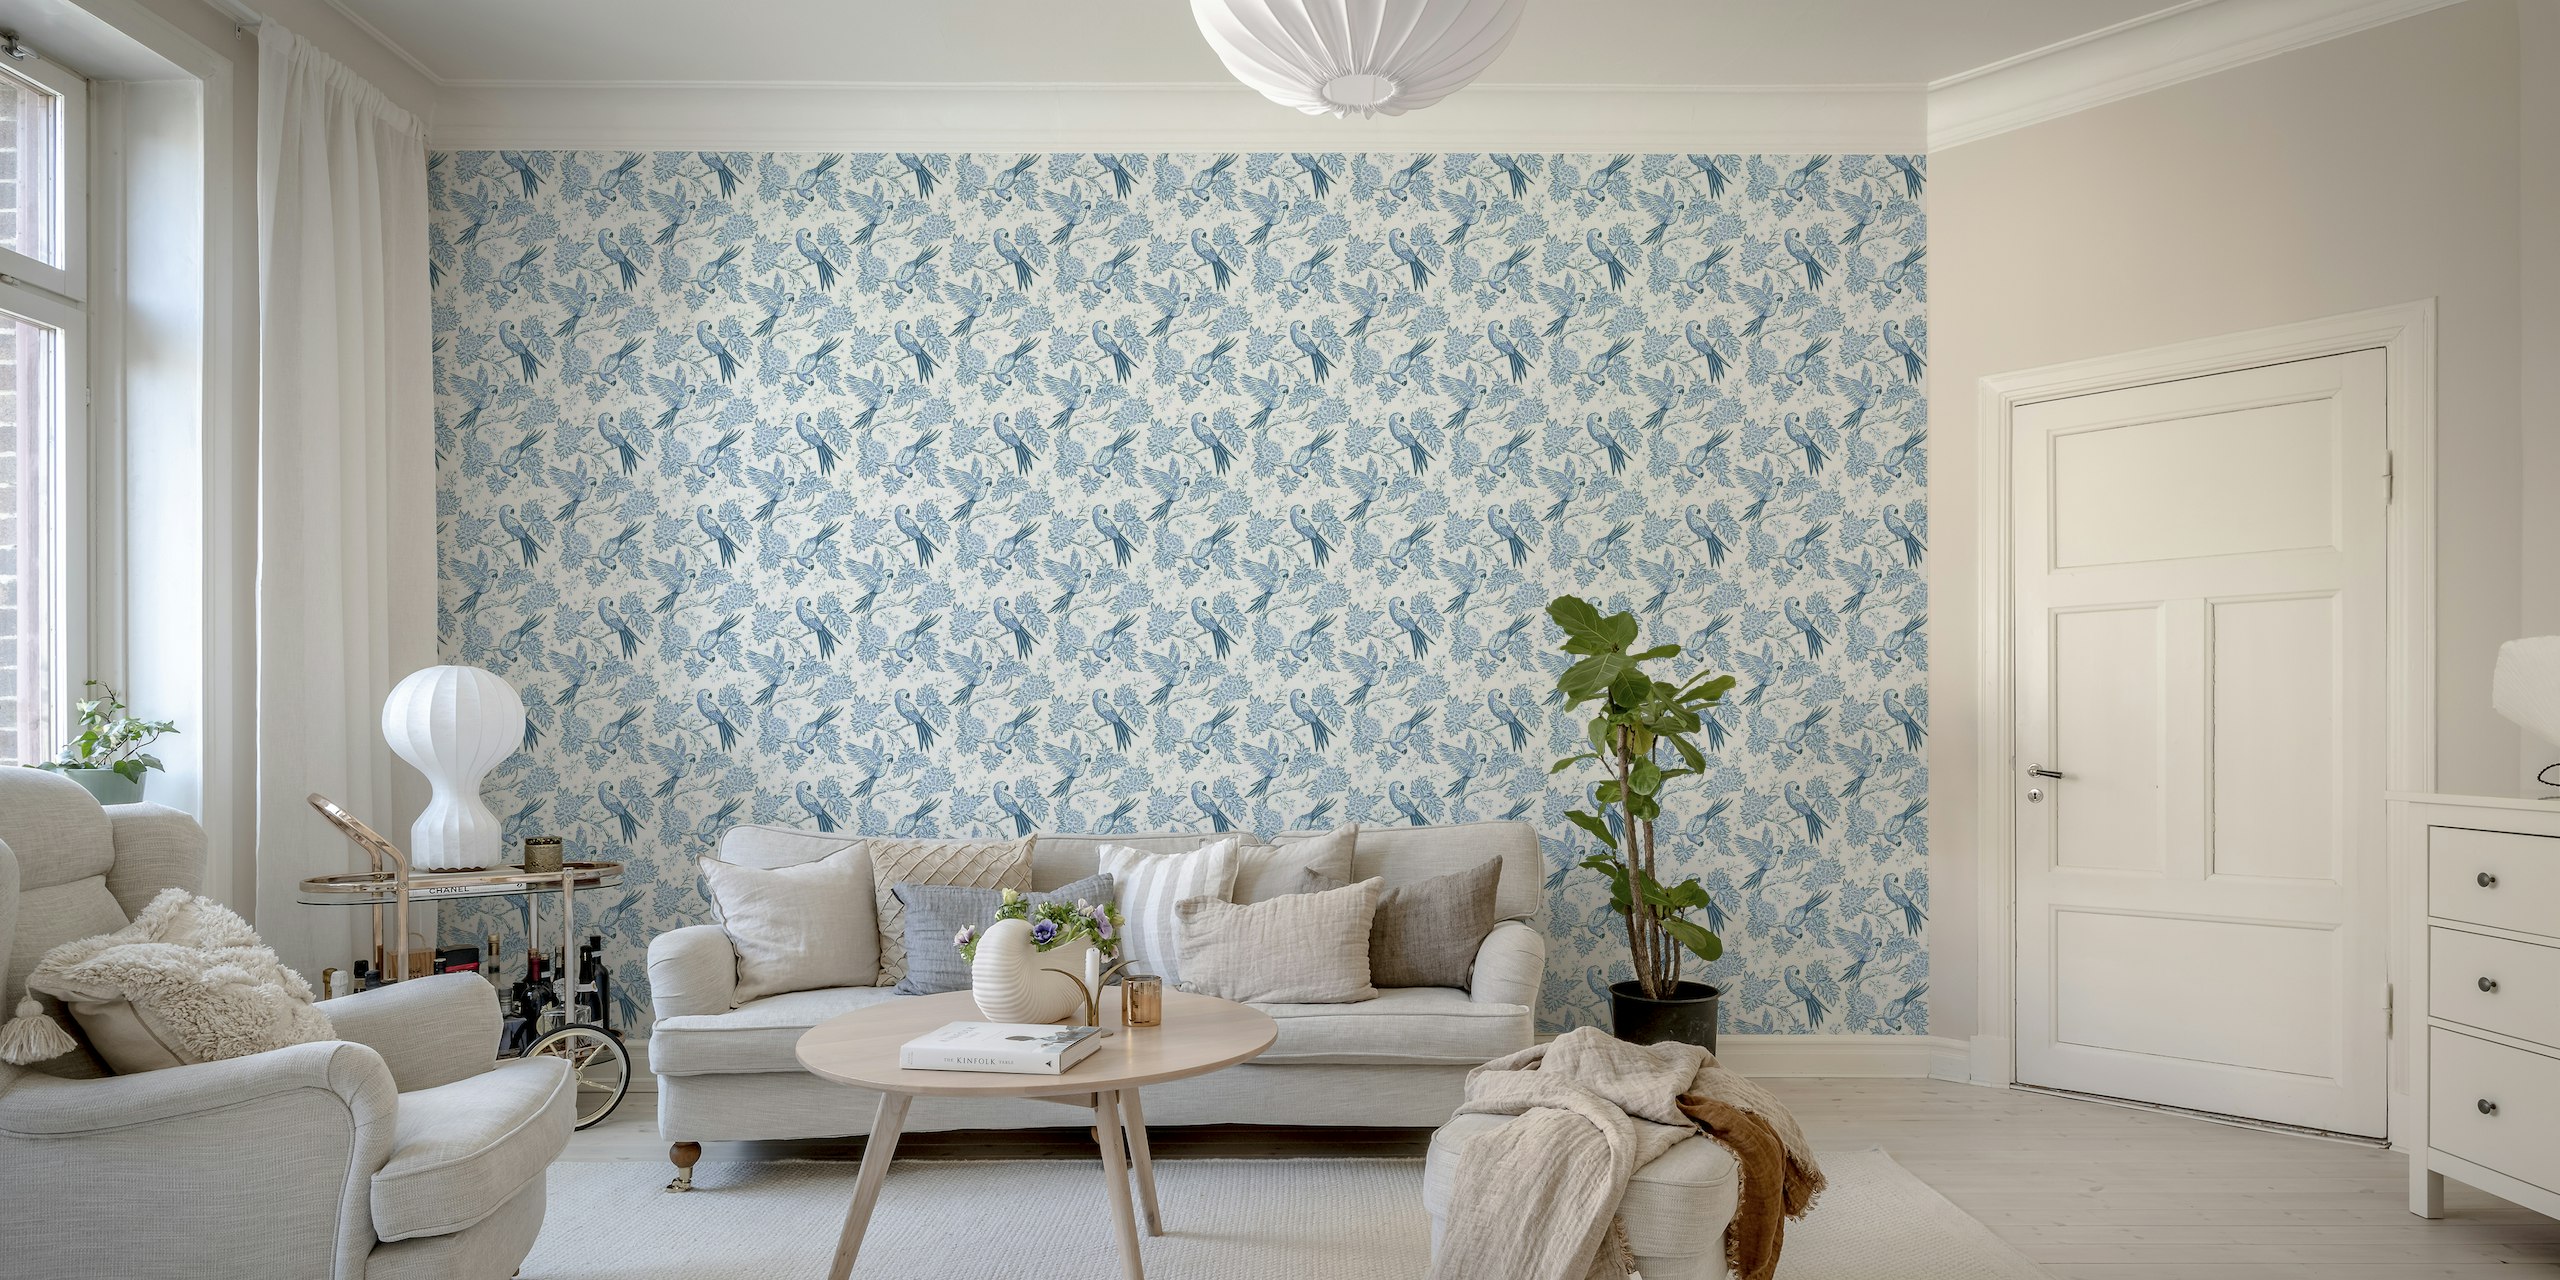 Parrot garden - blue and white wallpaper